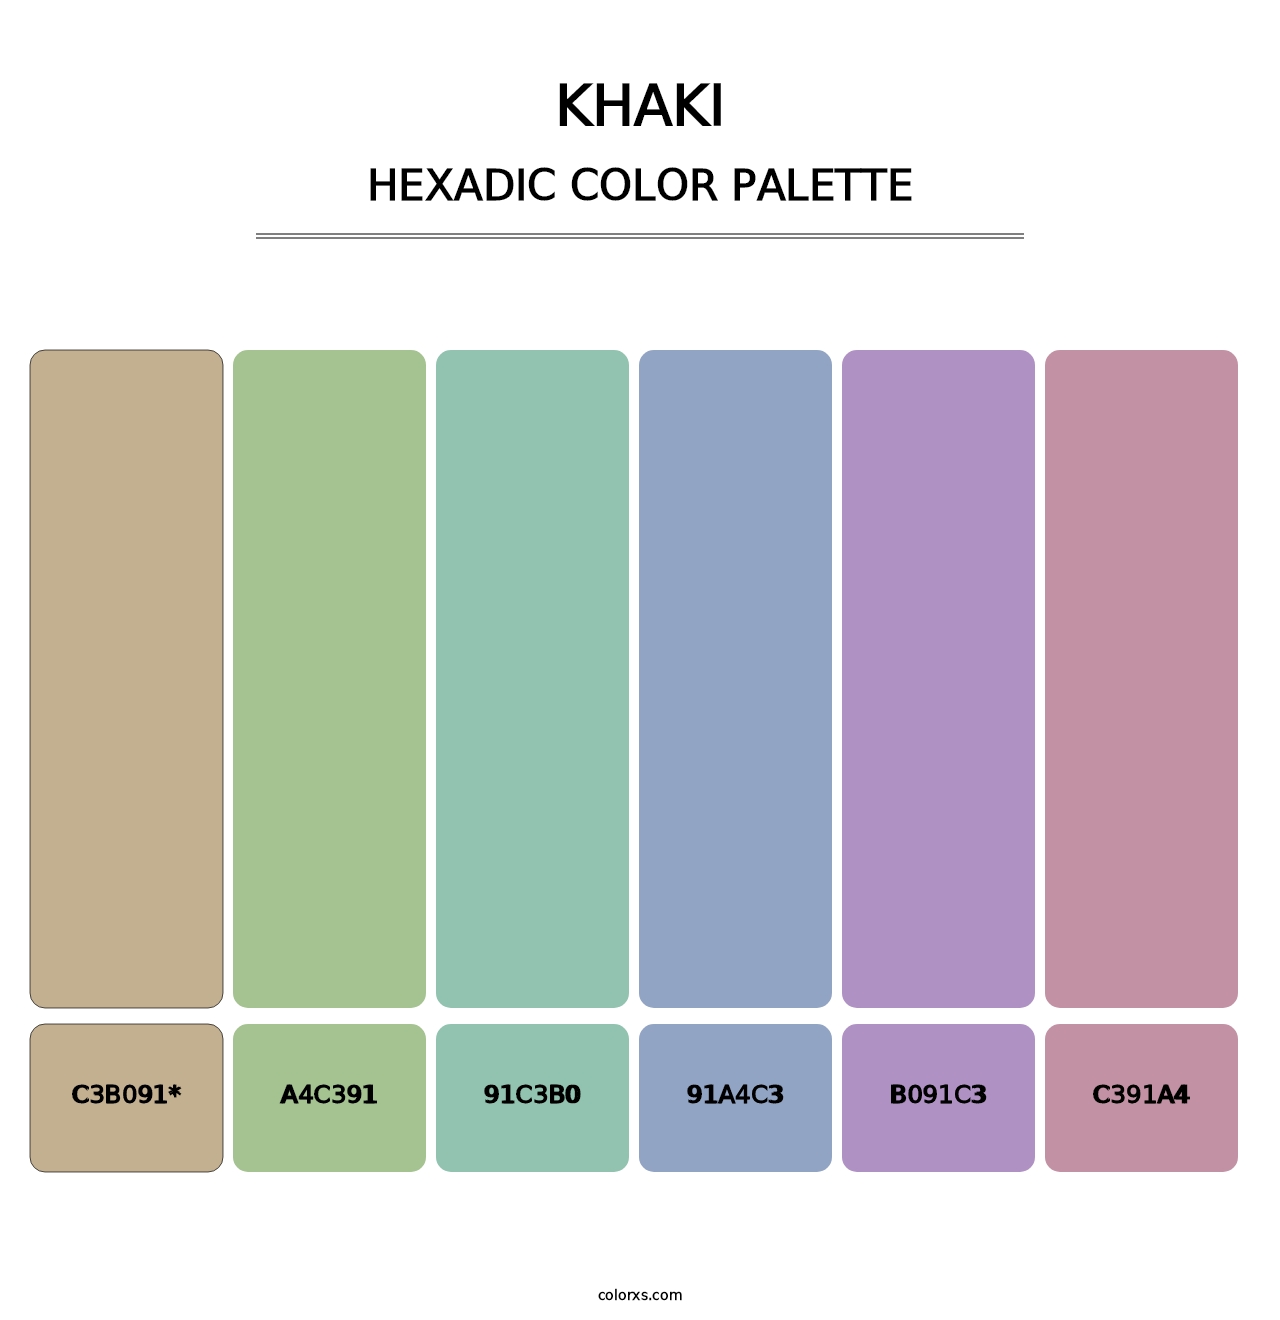 Khaki - Hexadic Color Palette